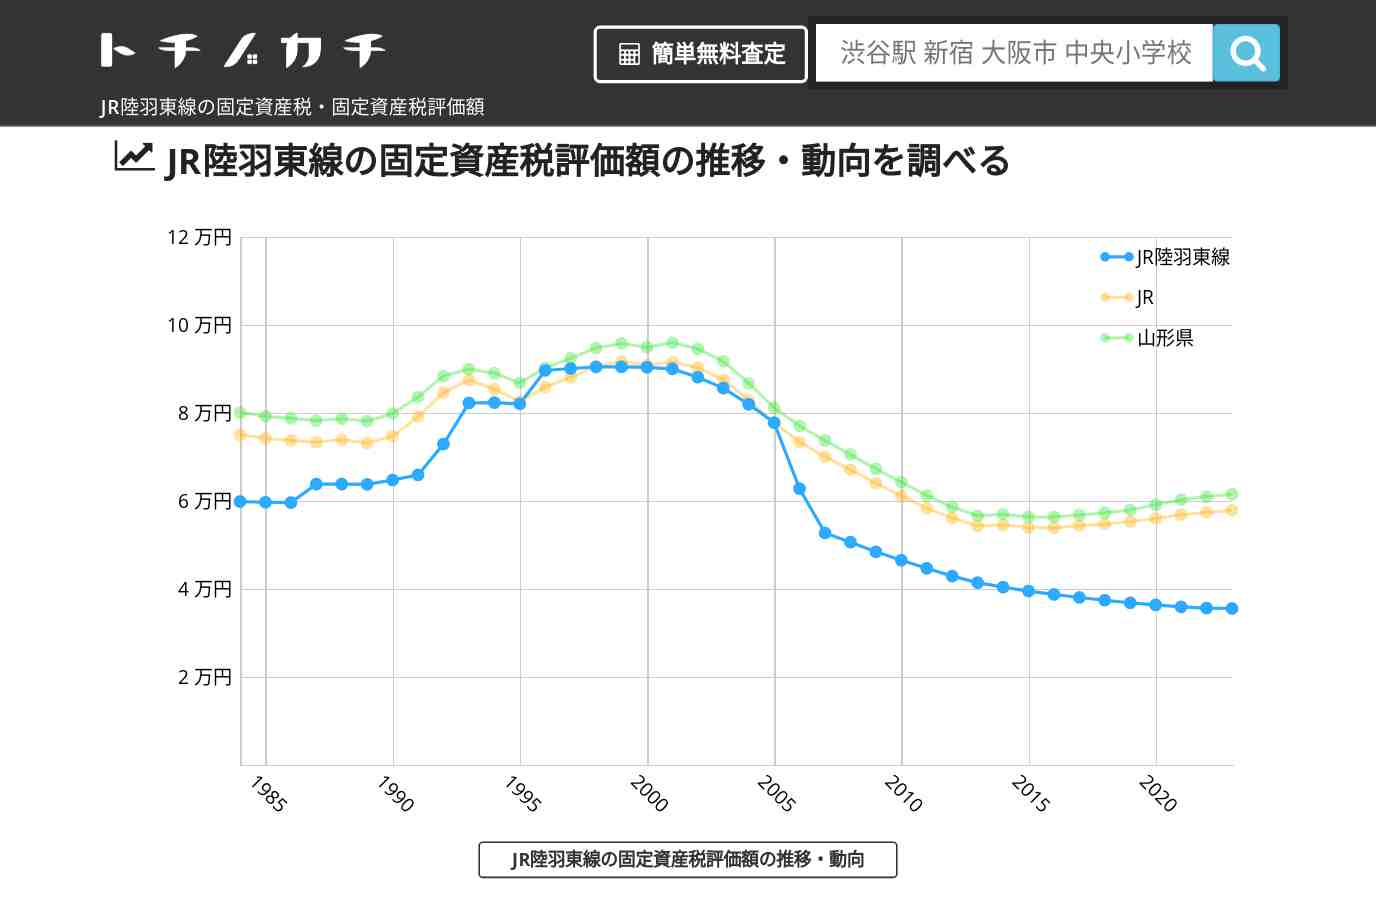 JR陸羽東線(JR)の固定資産税・固定資産税評価額 | トチノカチ